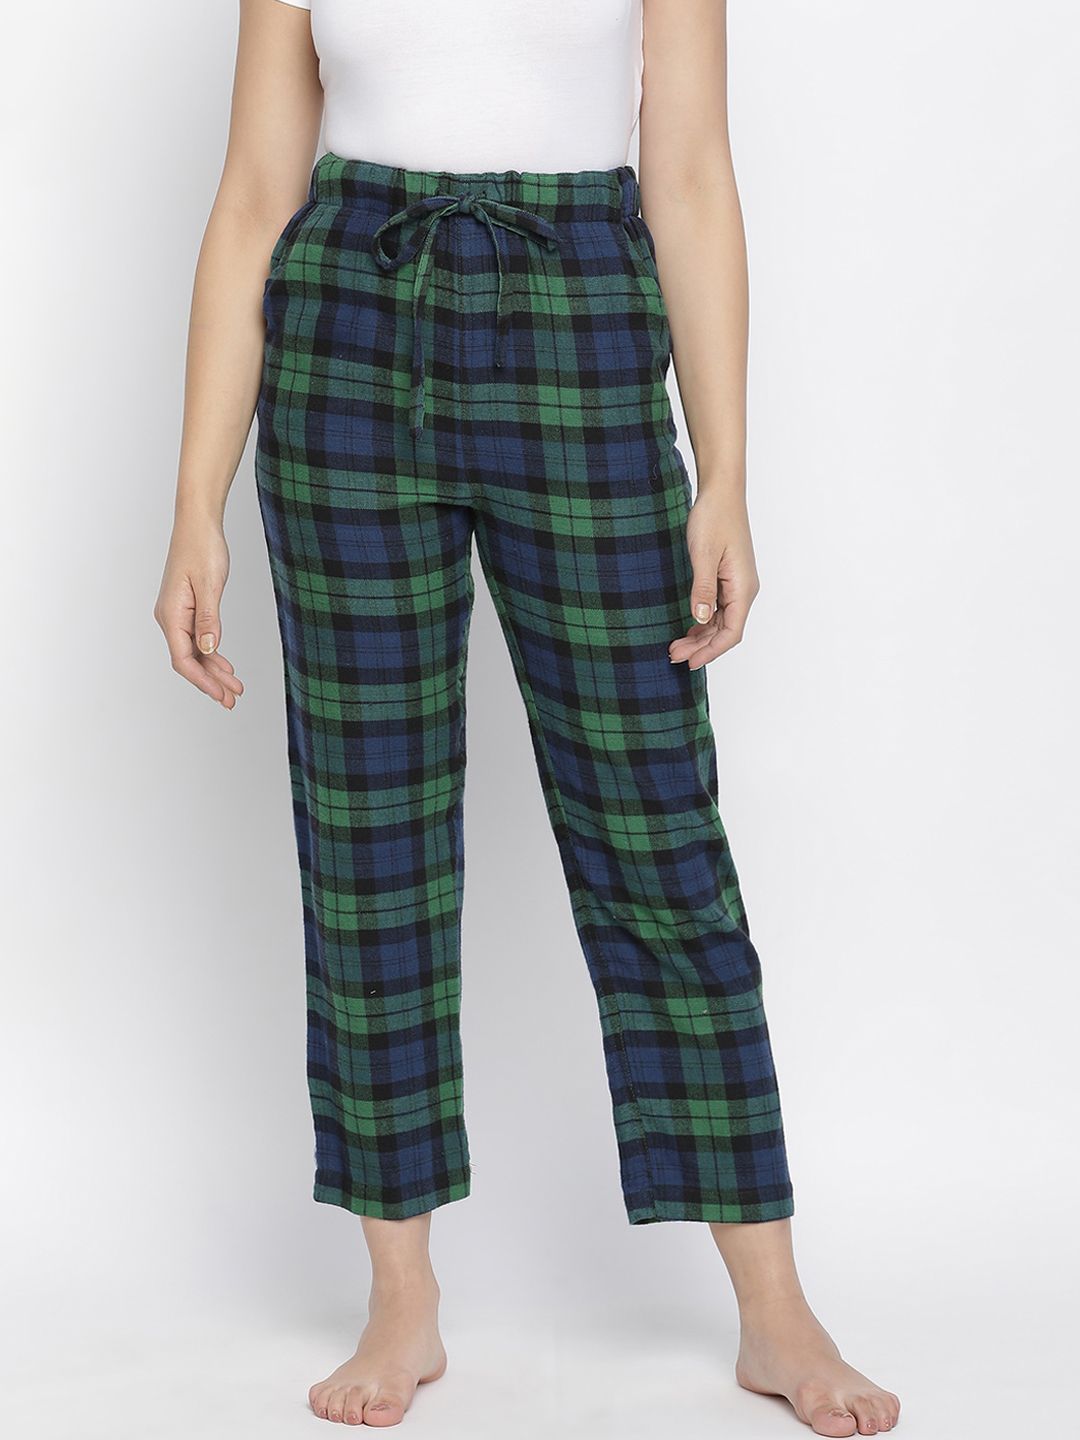 Oxolloxo Women Green & Black Checked Cotton Pyjama Price in India